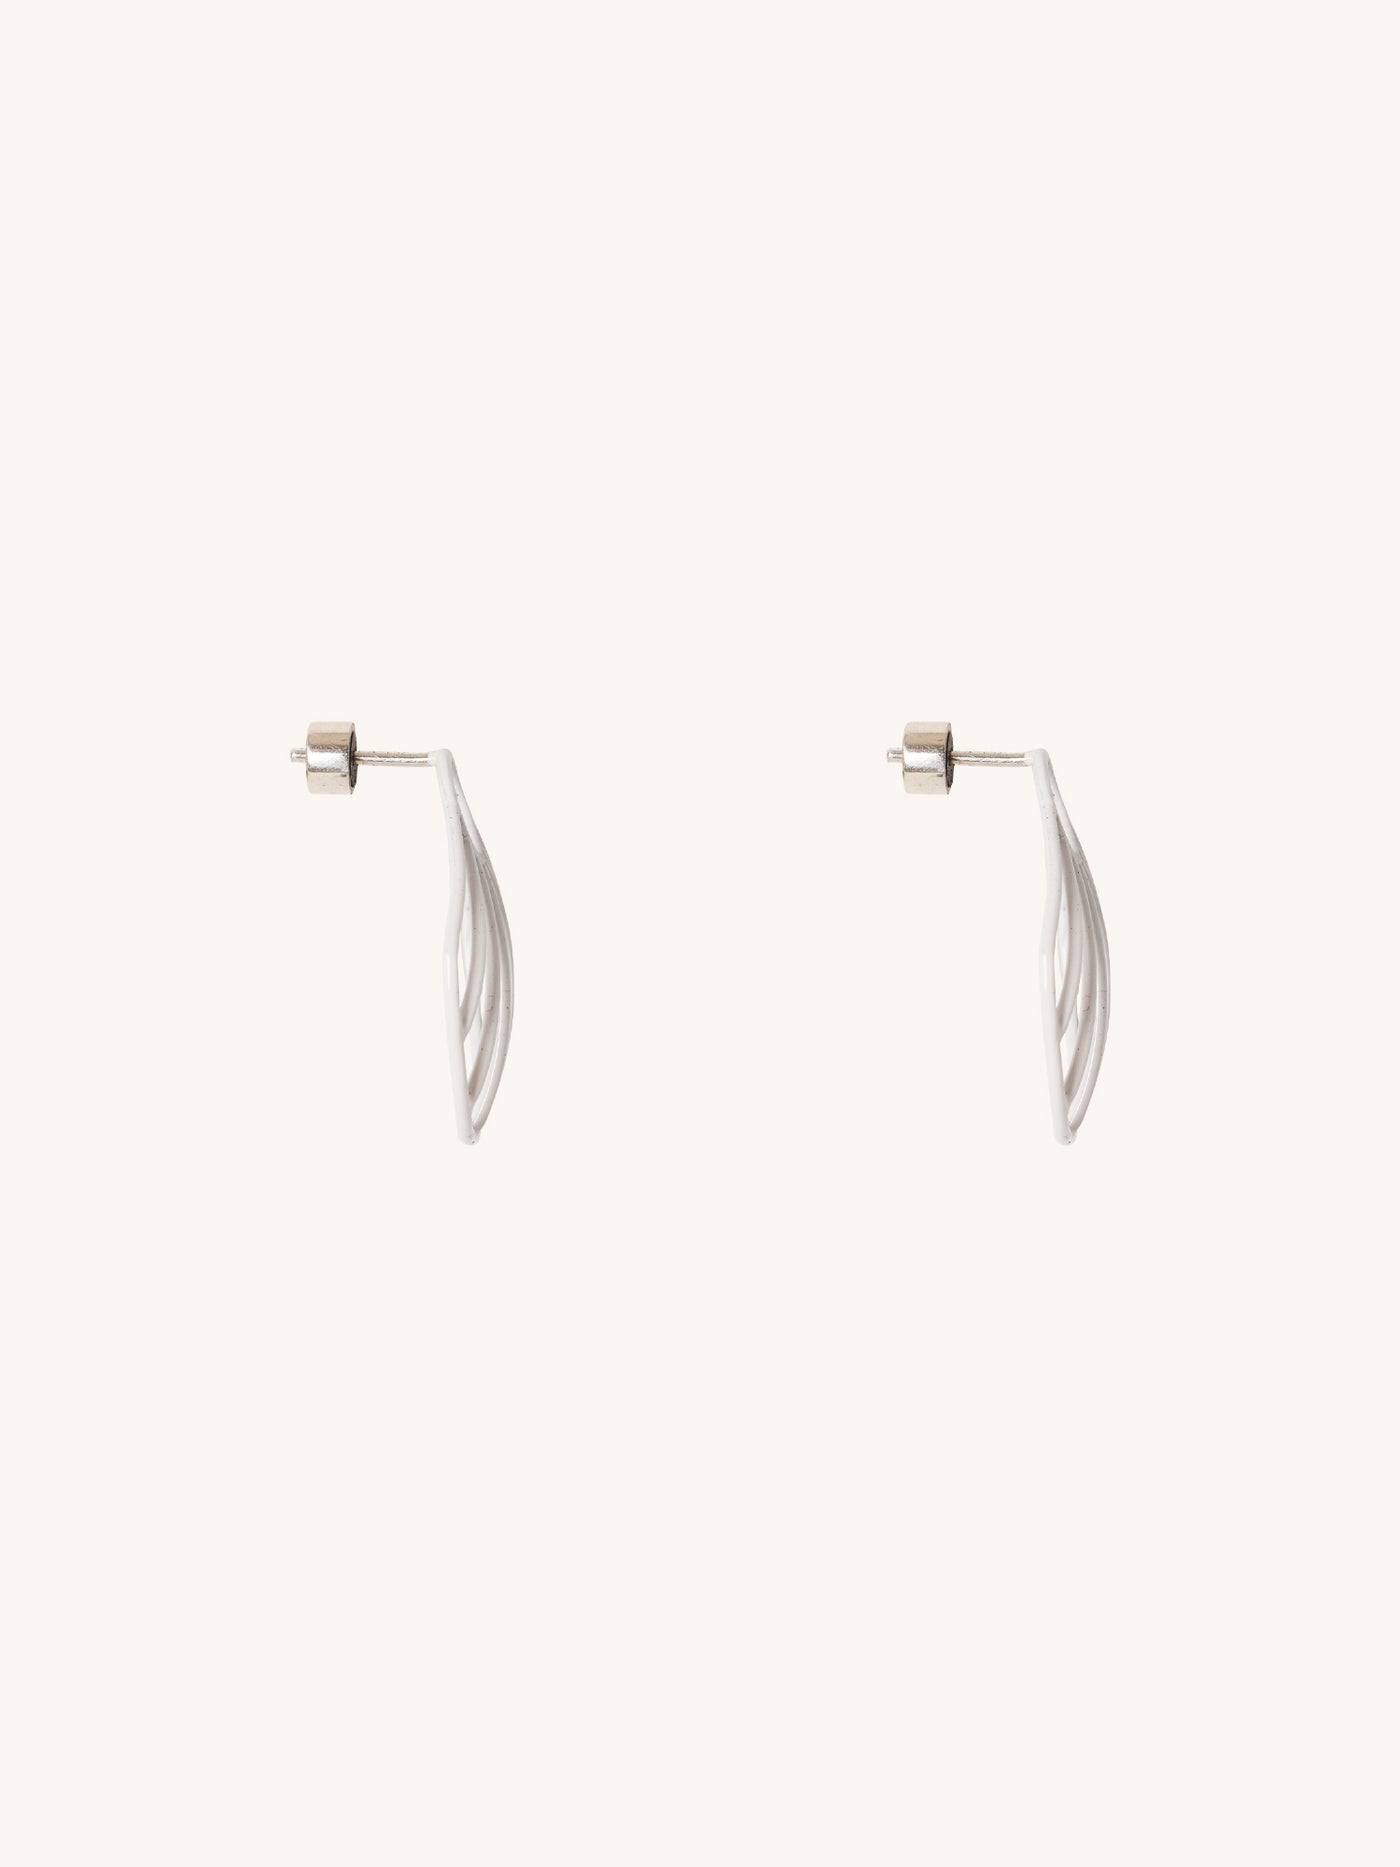 White Small Clam Earrings